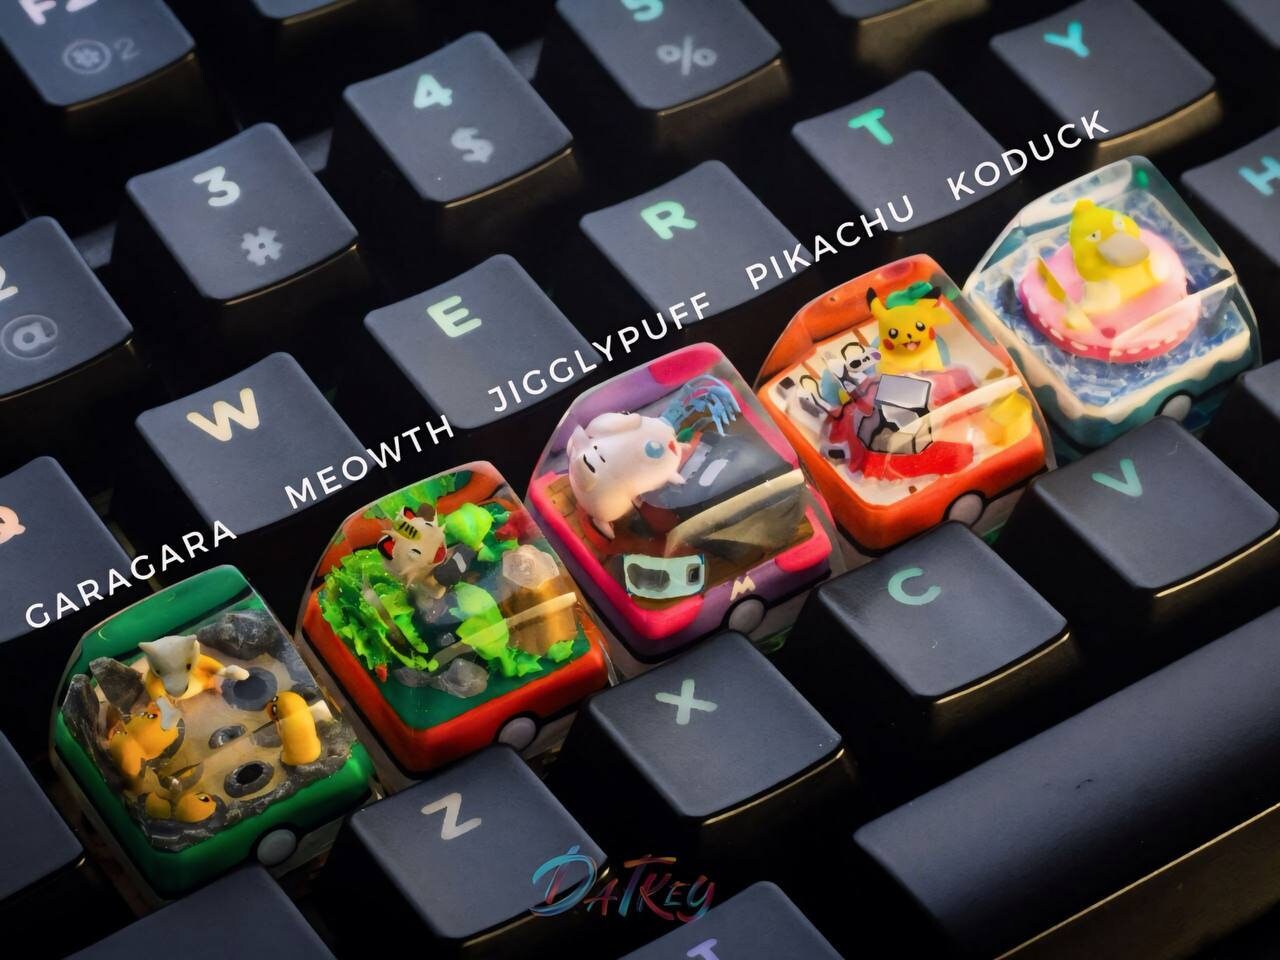 Bulbasaur Keycap, Pokemon Keycap, Keycap Set, Esc Keycap, Keycap for MX Cherry Switches Keyboard, Handmade Gift